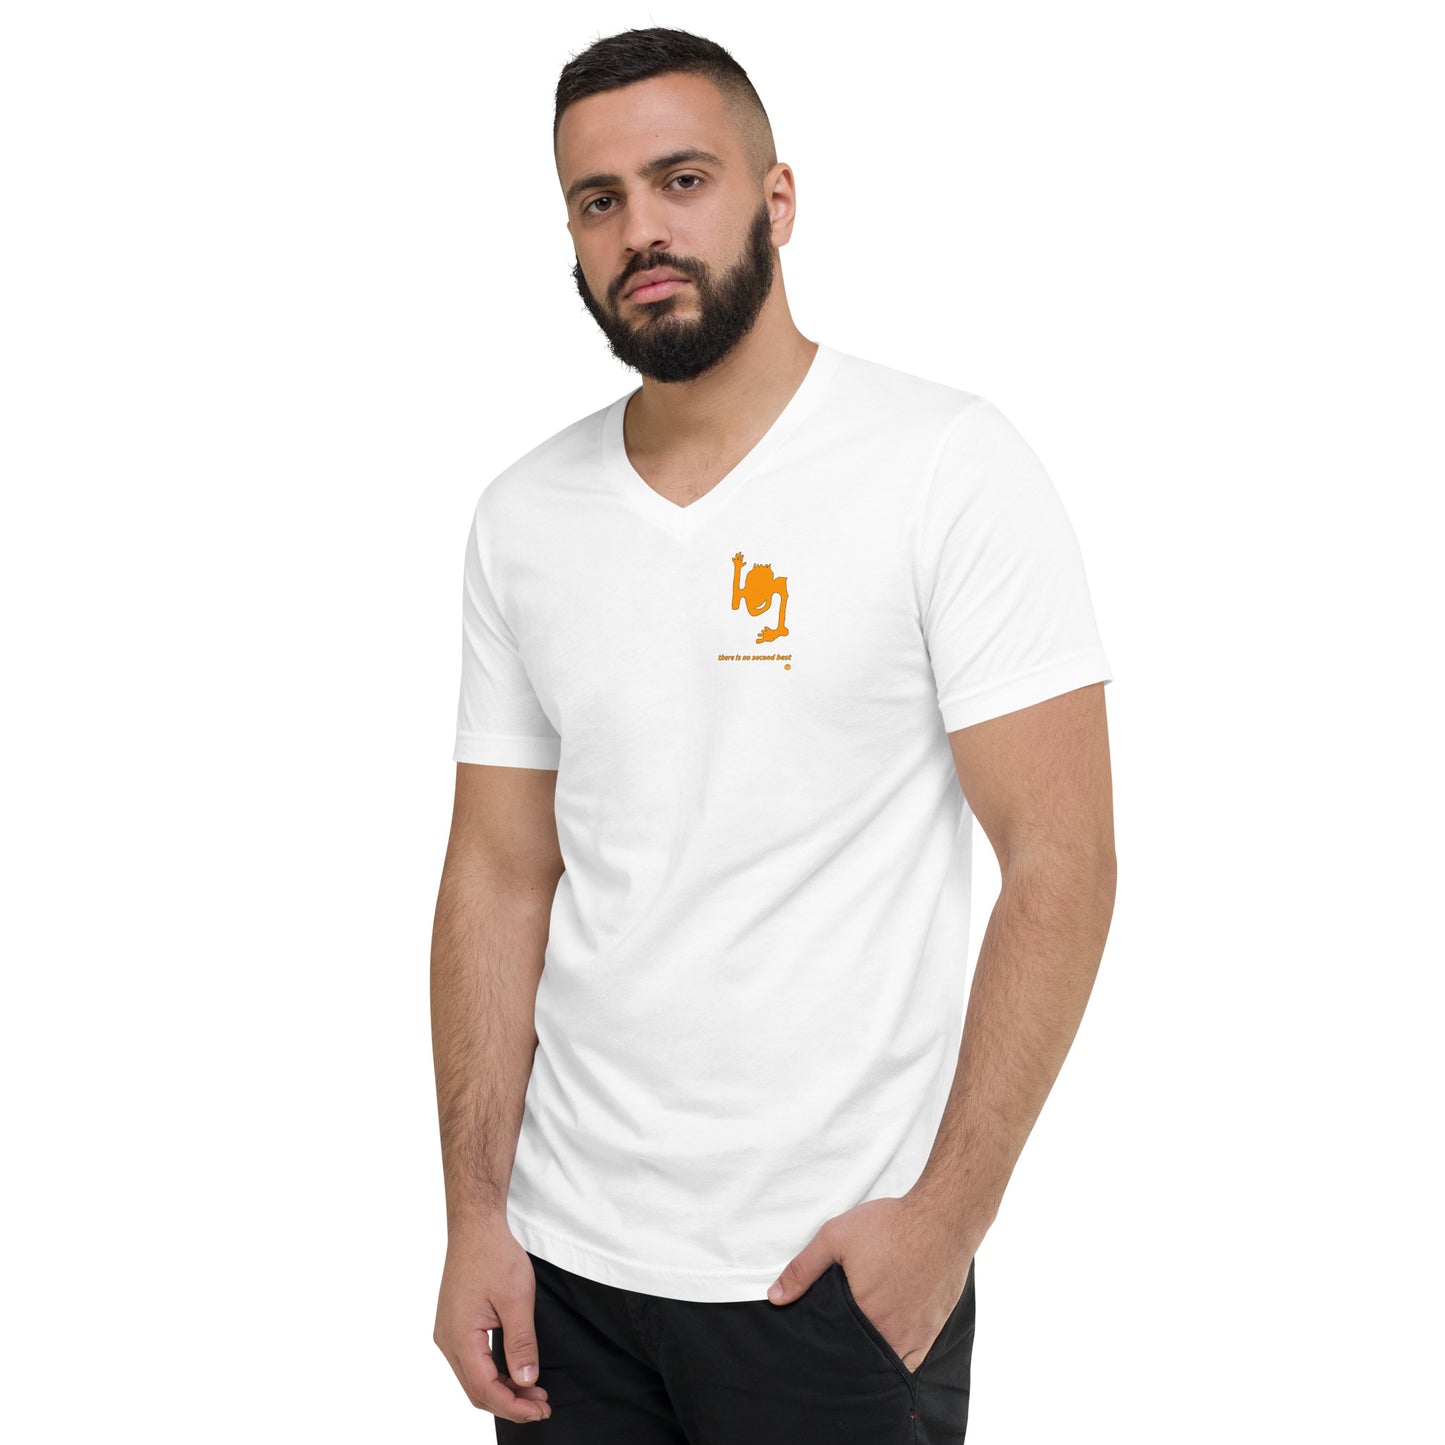 Unisex Short Sleeve V-Neck T-Shirt "2Best_sm"